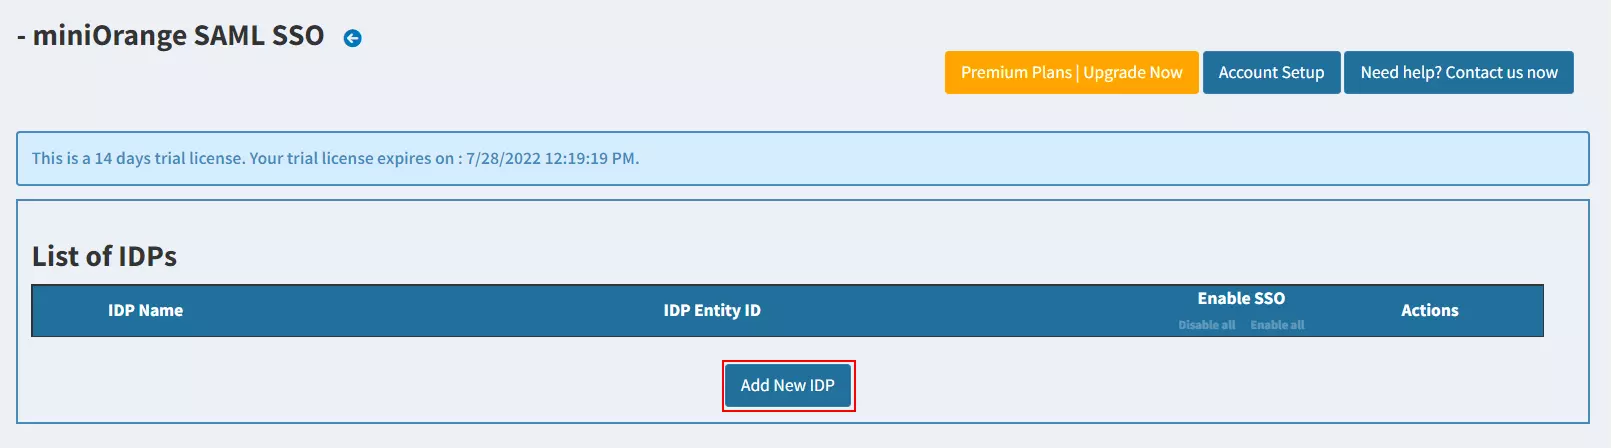 nopCommerce Single Sign-On (SSO) using Salesforce Community as IDP - Add new IDP